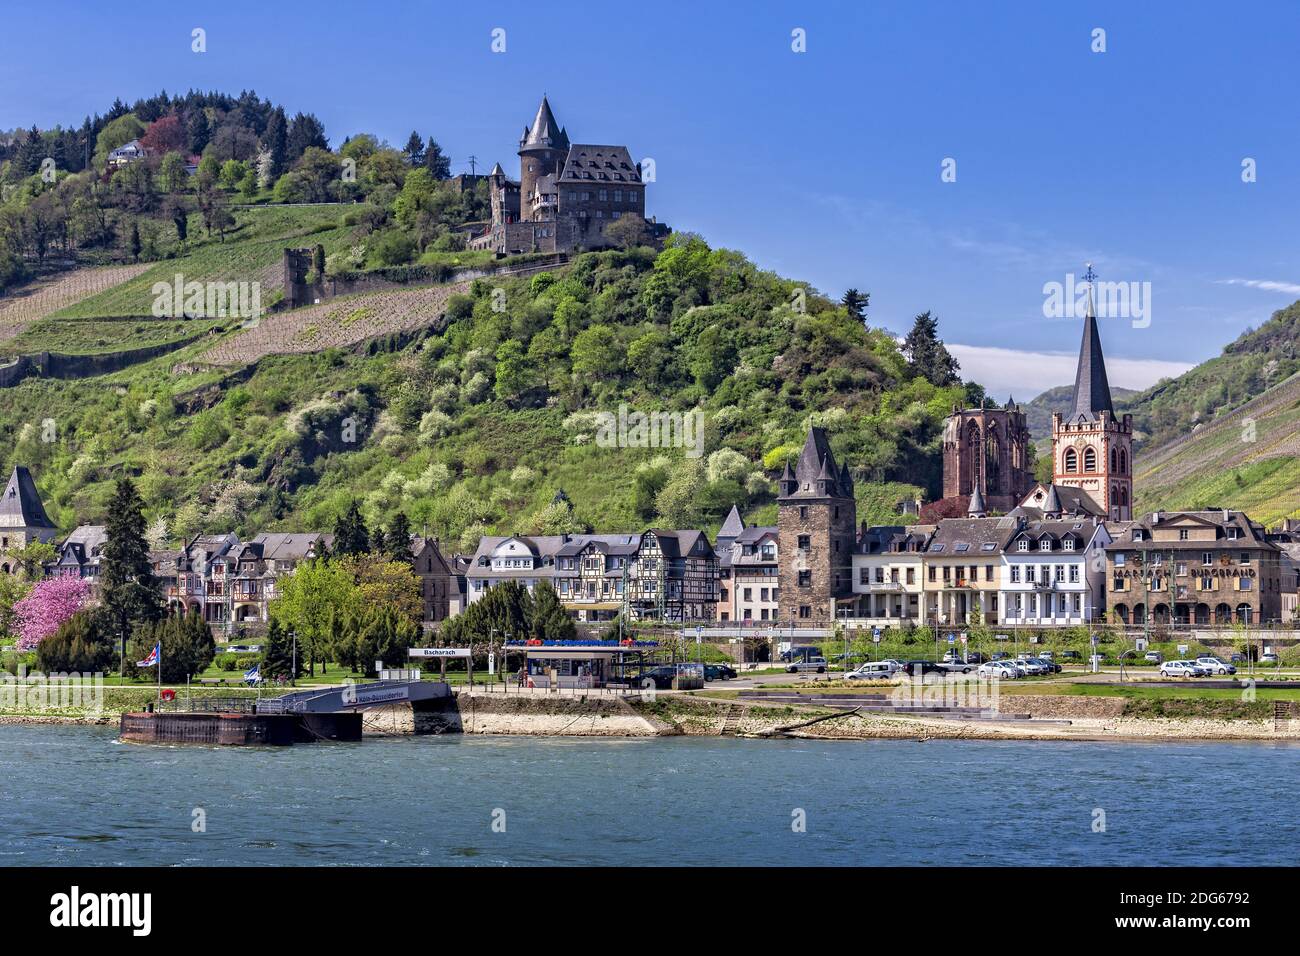 Bacharach on the Rhine Stock Photo